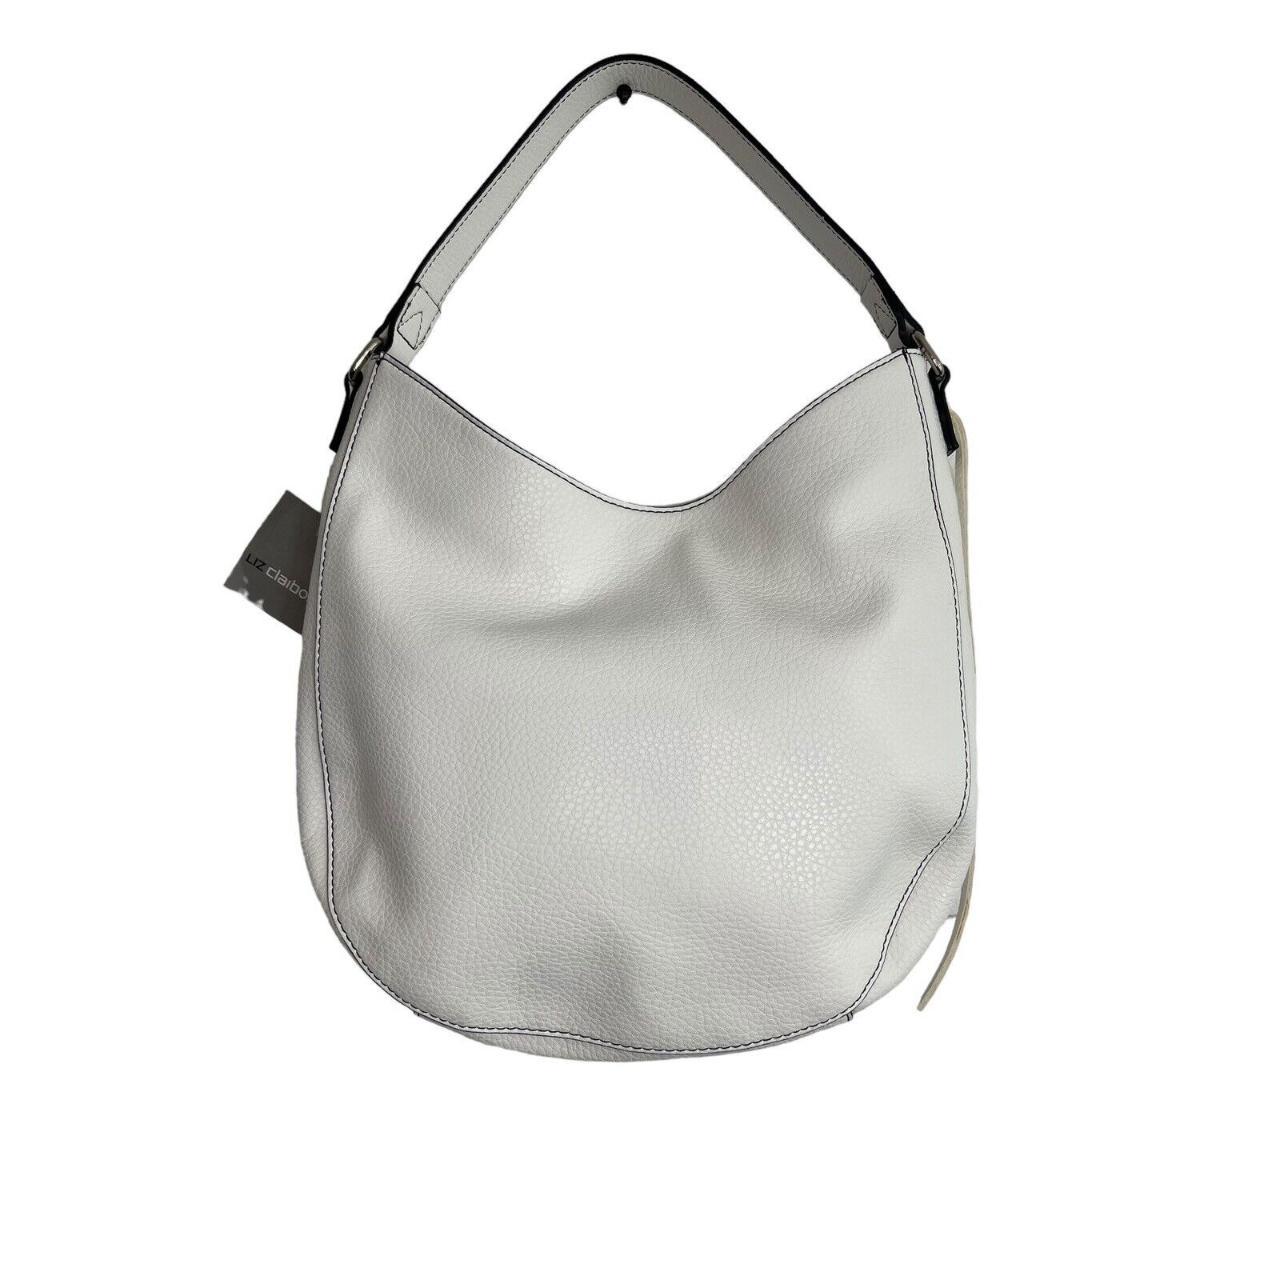 Liz Claiborne Brown Fabric Hobo Bag | eBay